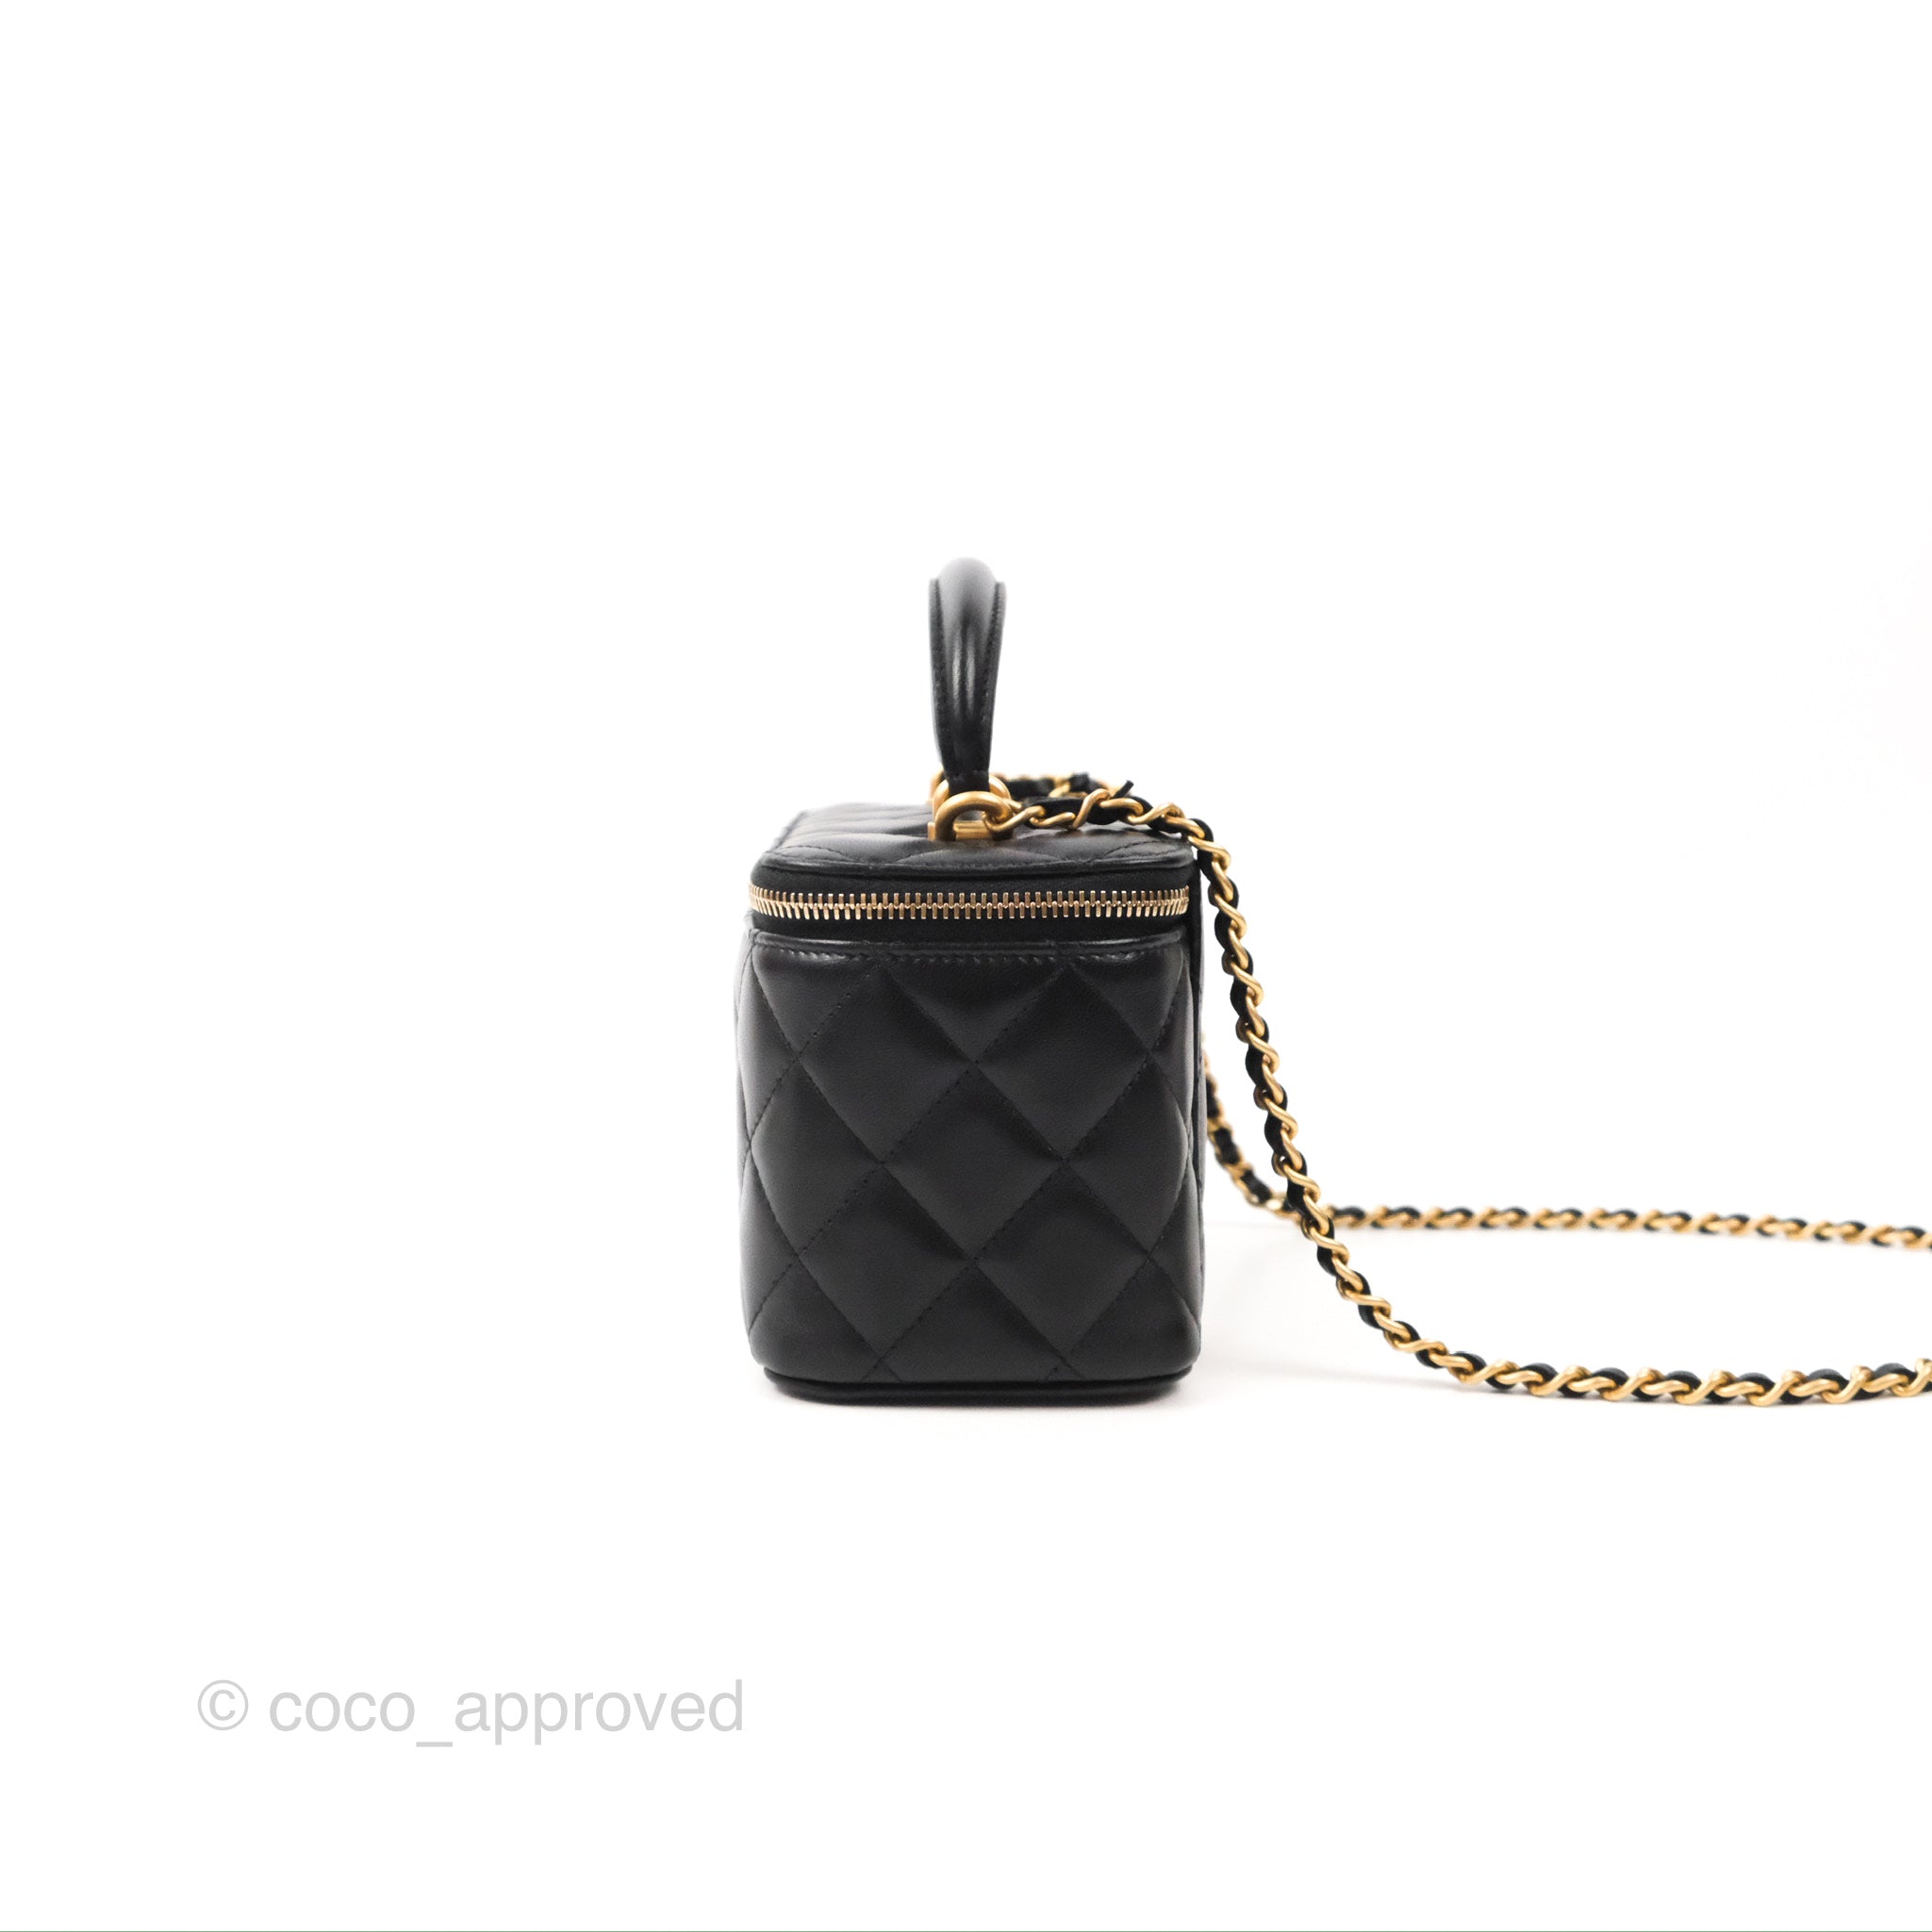 gold chain chanel bag black